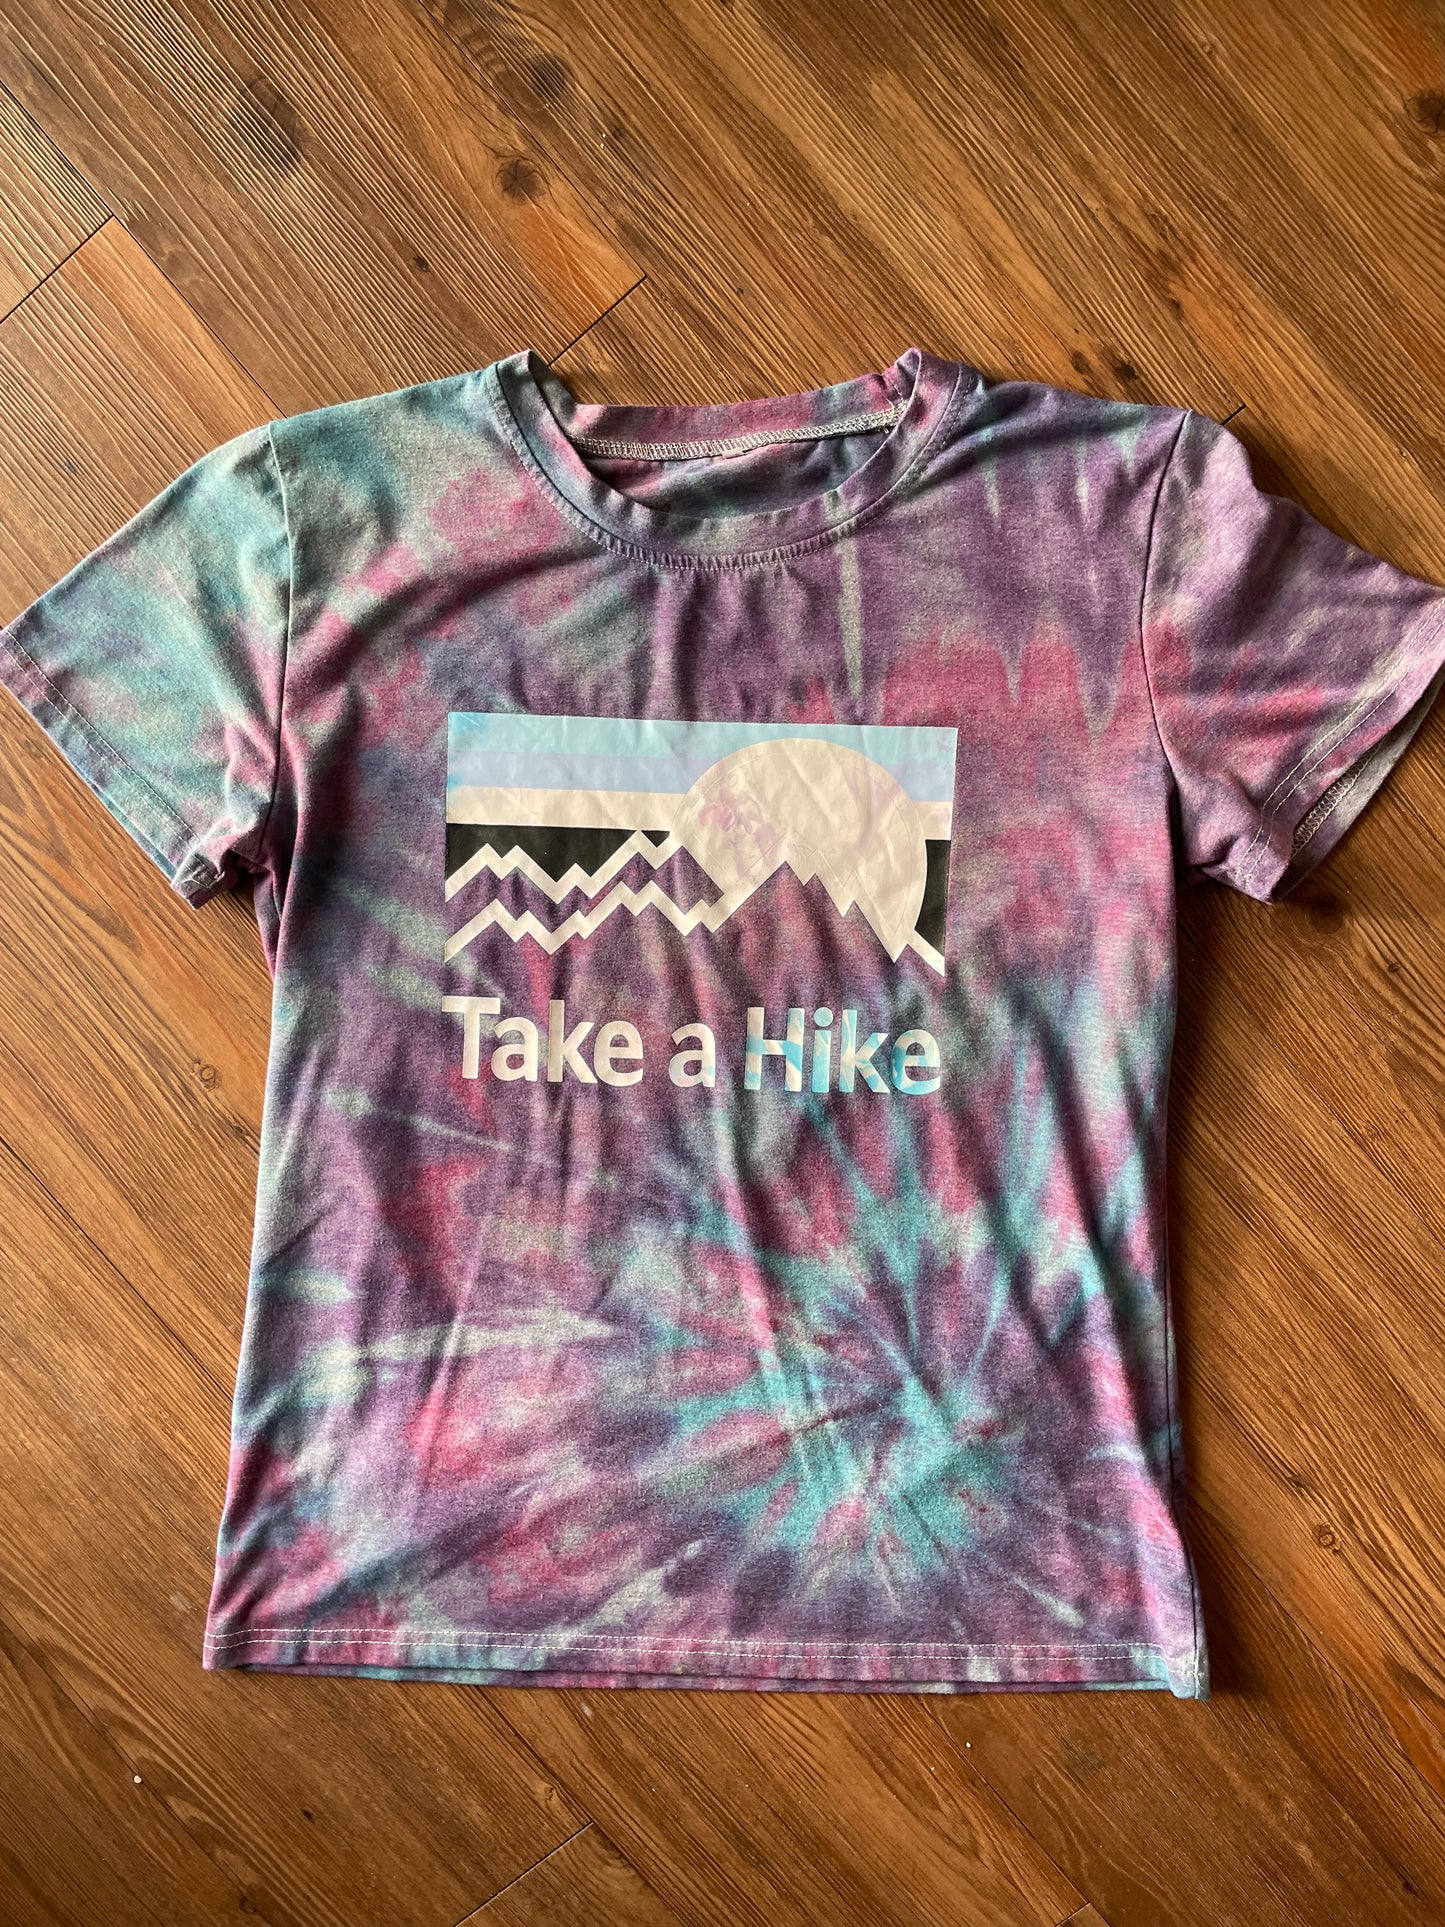 LARGE Men’s Take a Hike Mountains Galaxy Spiral Tie Dye T-Shirt | Pastel Purple and Blue Ice Dye Short Sleeve